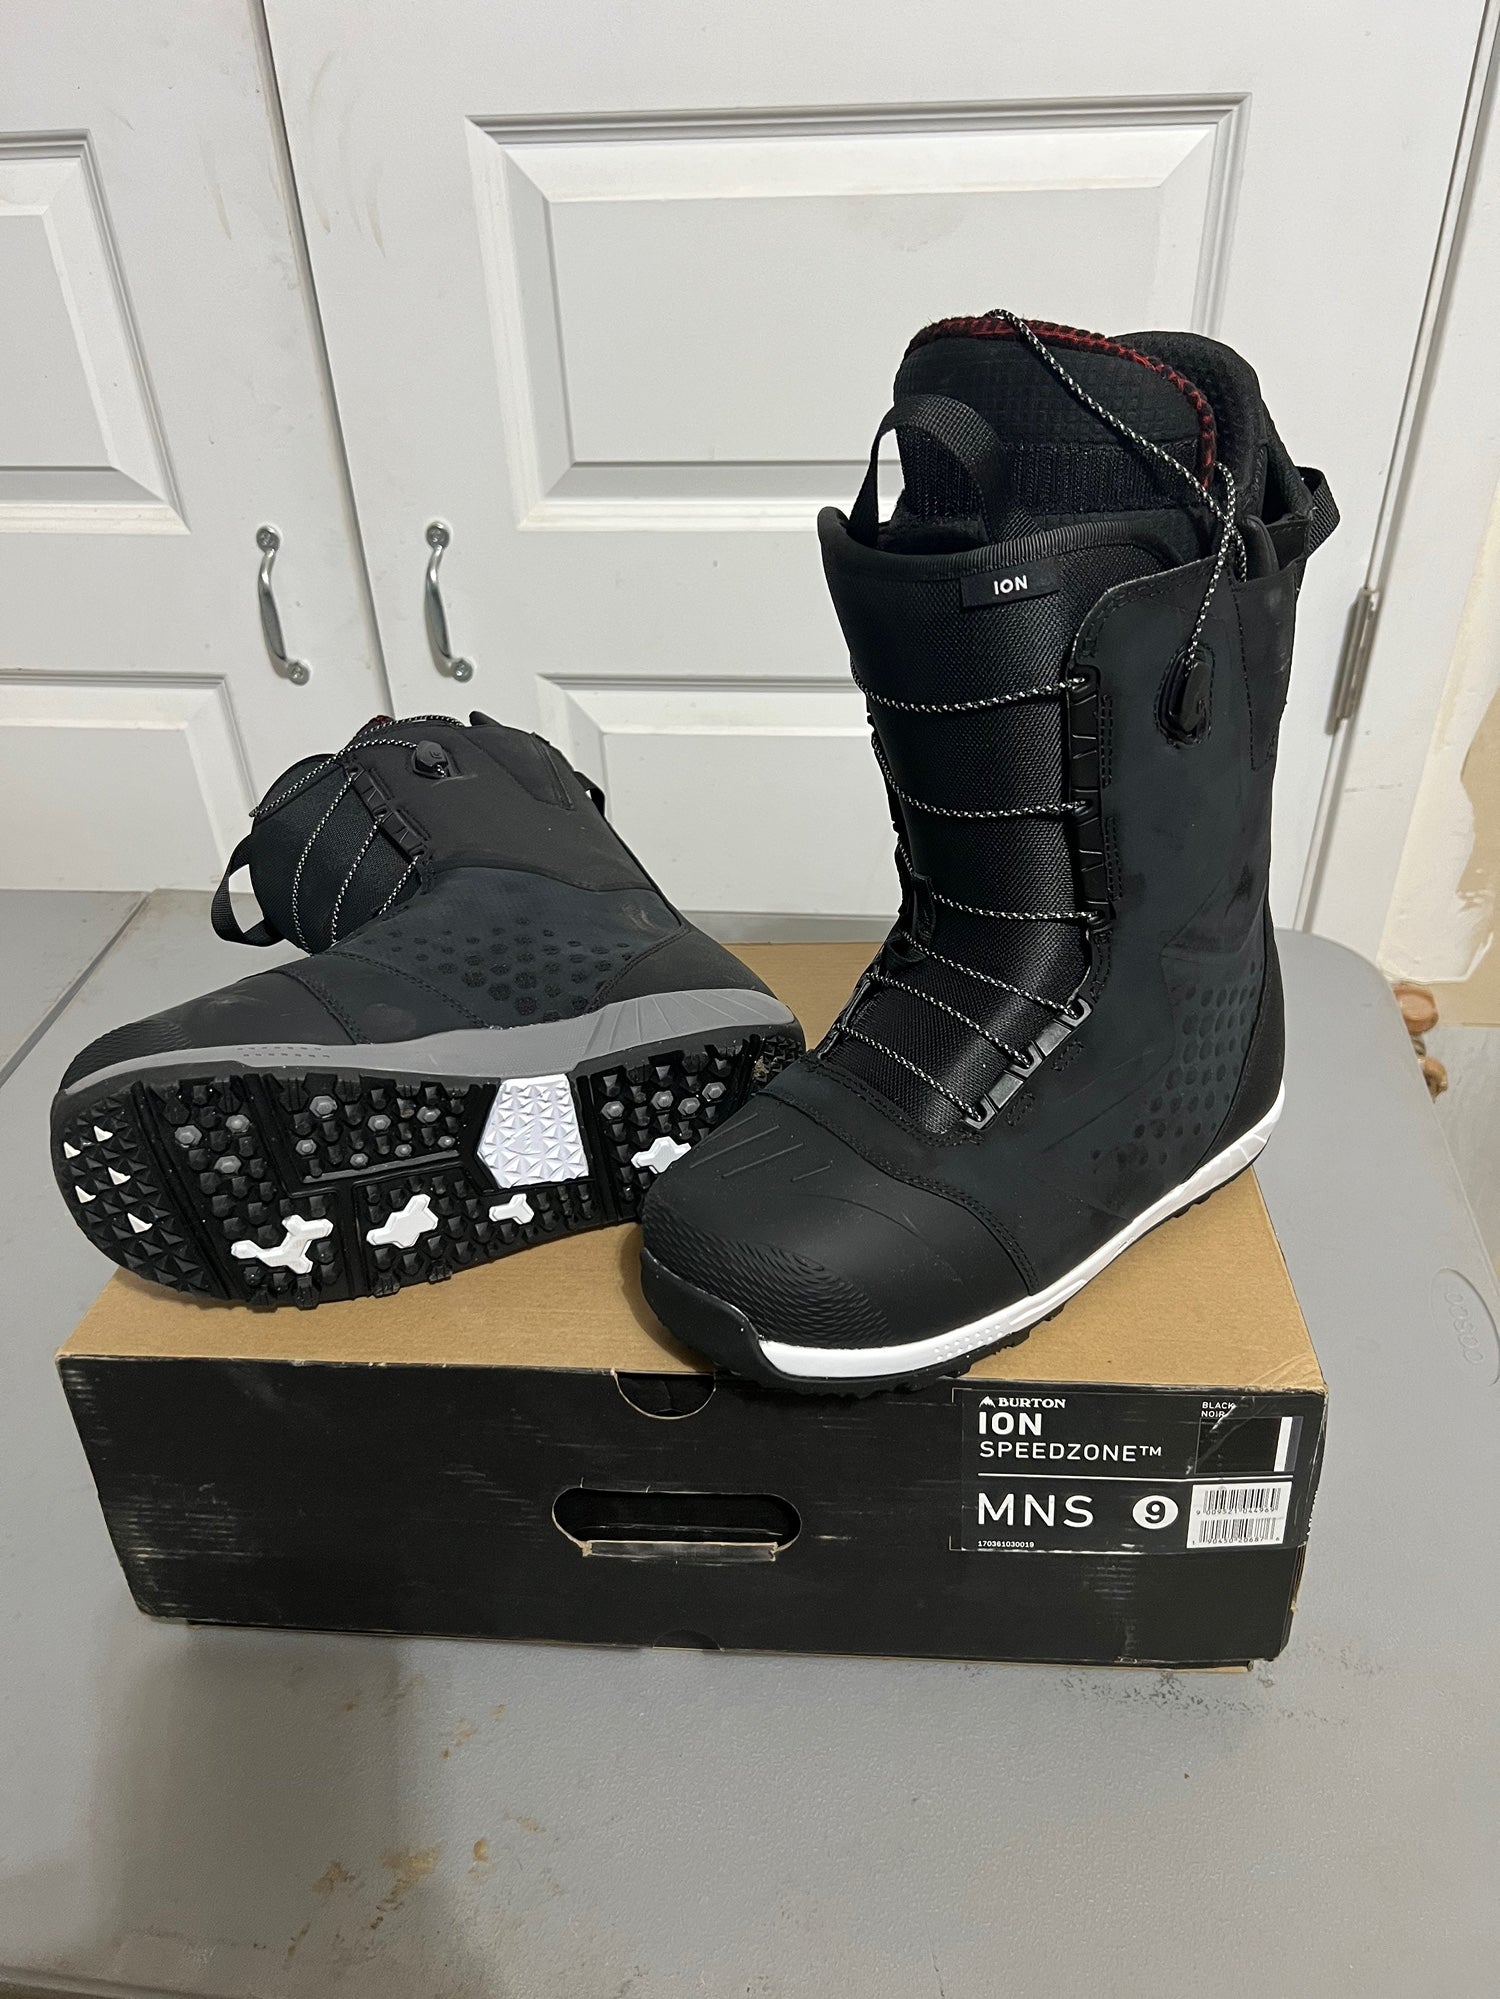 New Size 9.0 (Women's 10) Burton Ion Snowboard Boots | SidelineSwap